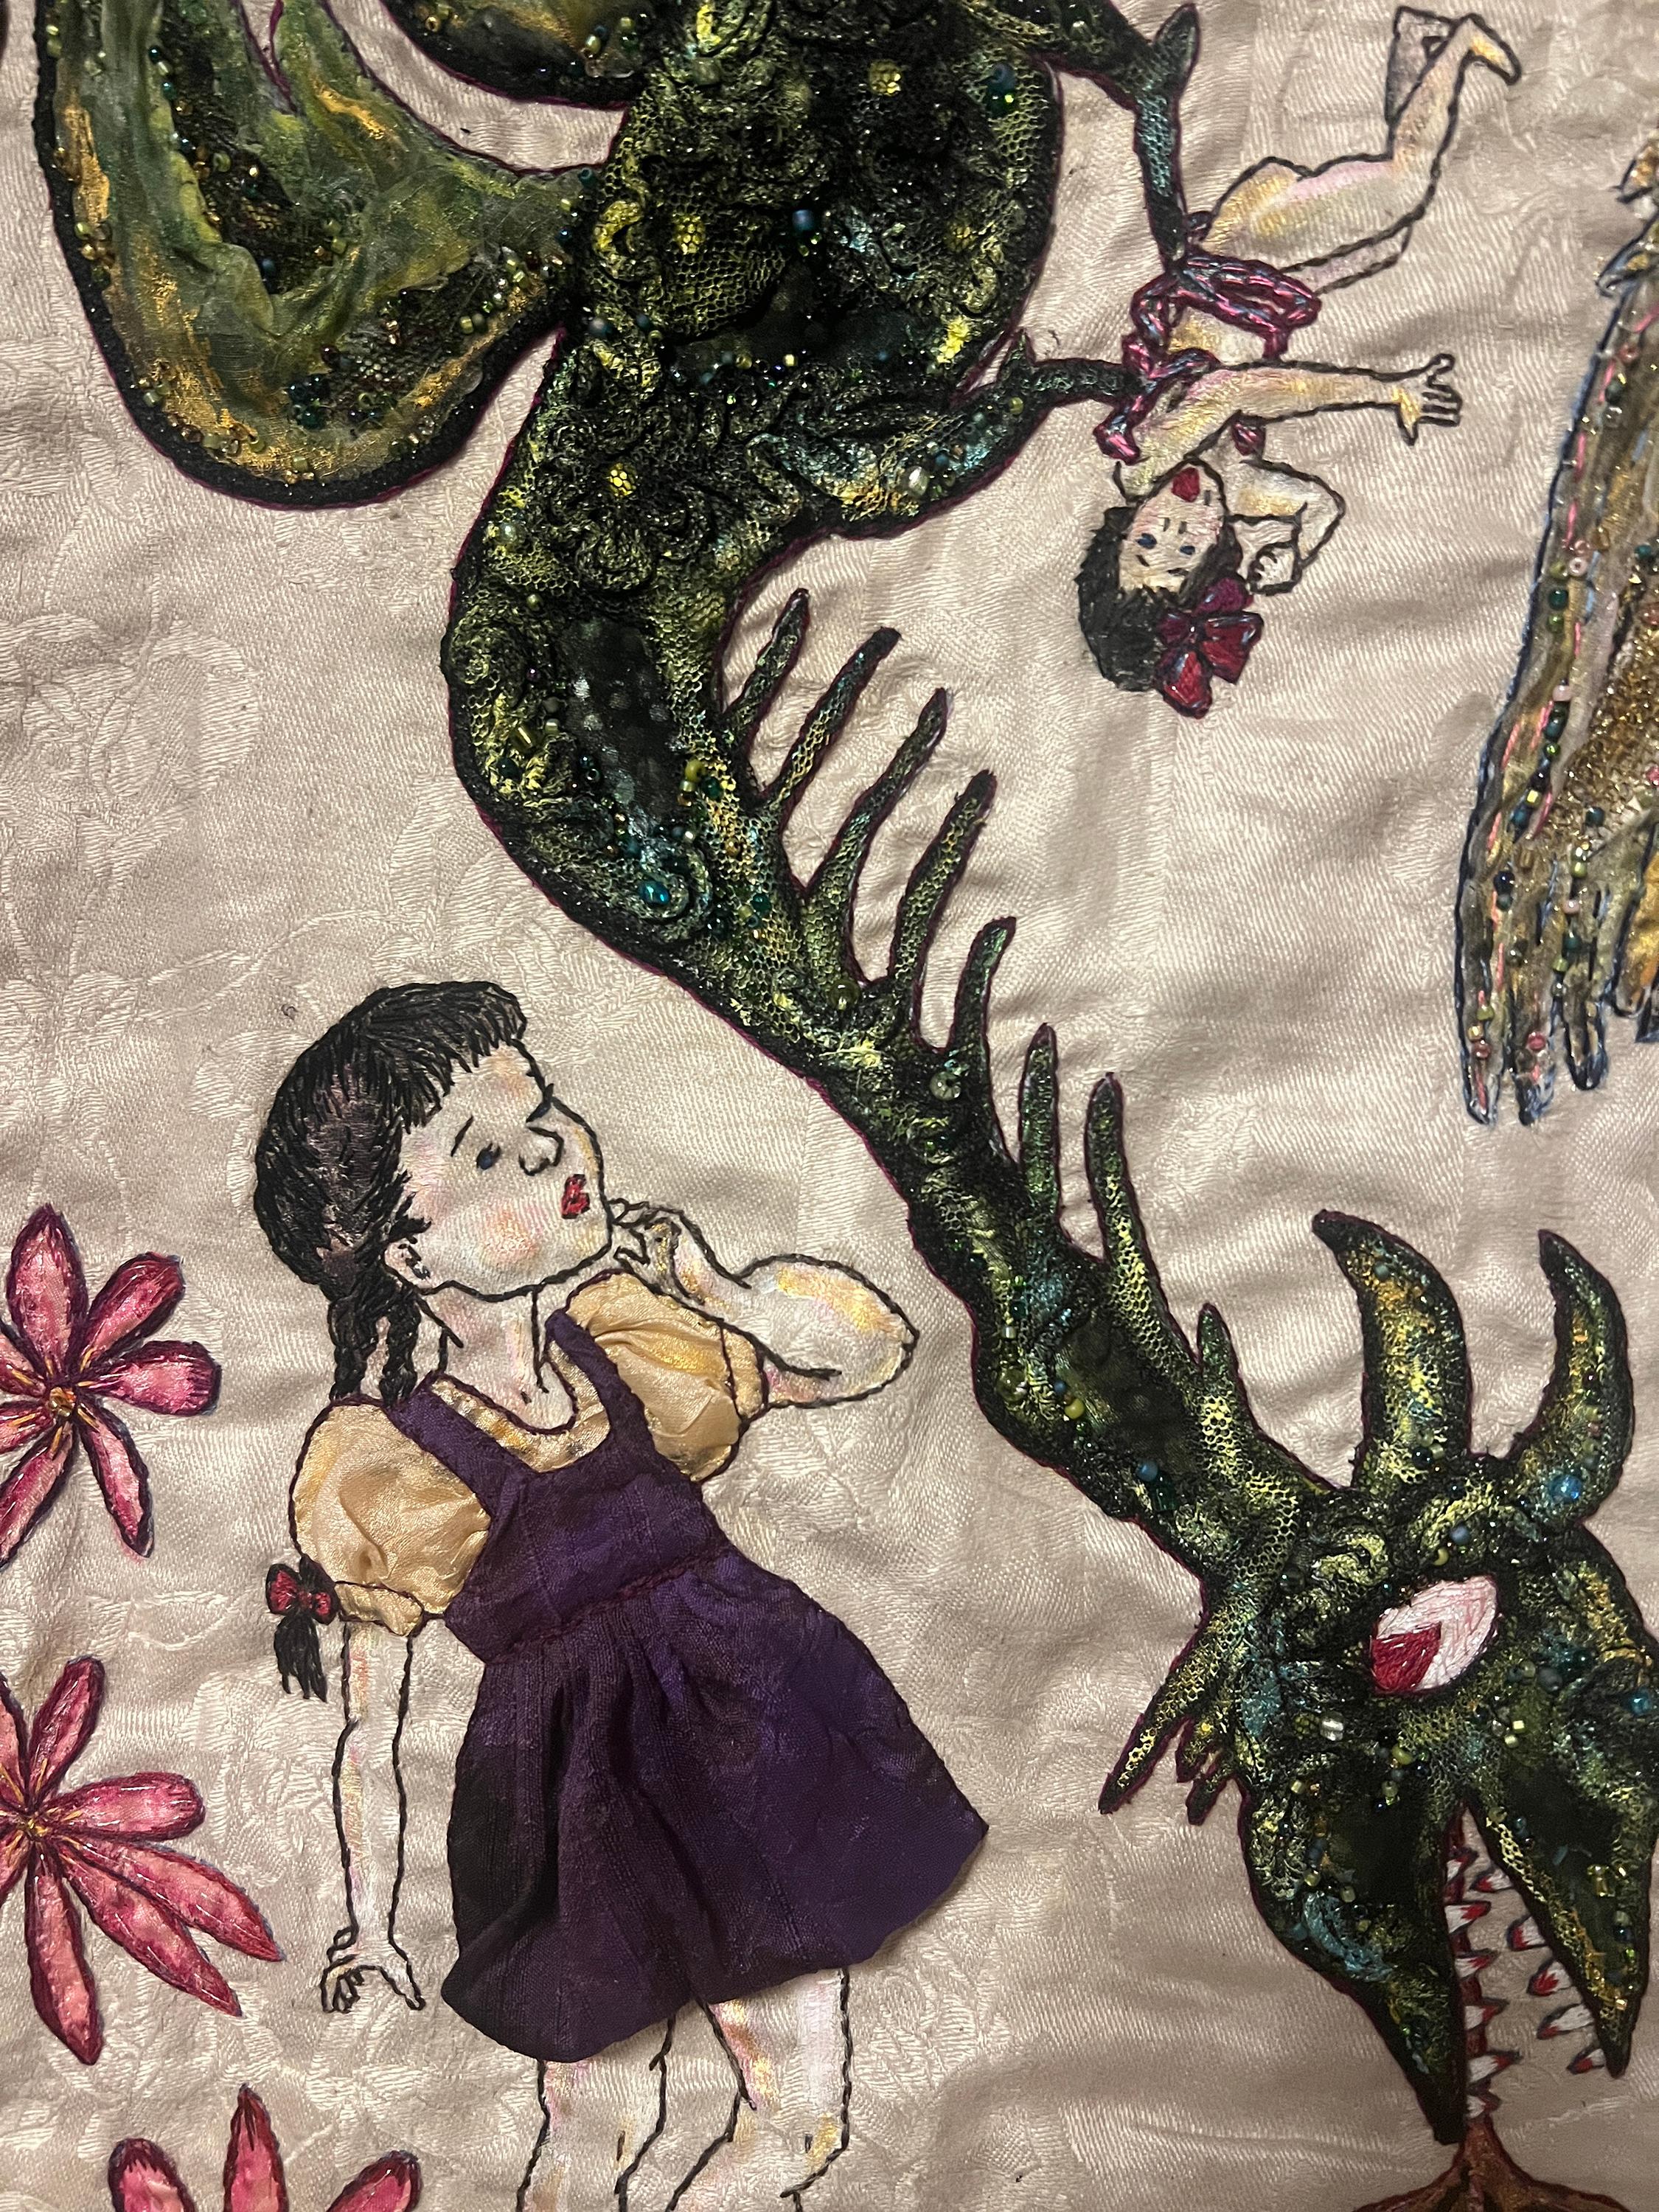 Fiber, Mixed Media, Hand Stitched: 'Dragon's Breath!' - Contemporary Mixed Media Art by Ann Vollum